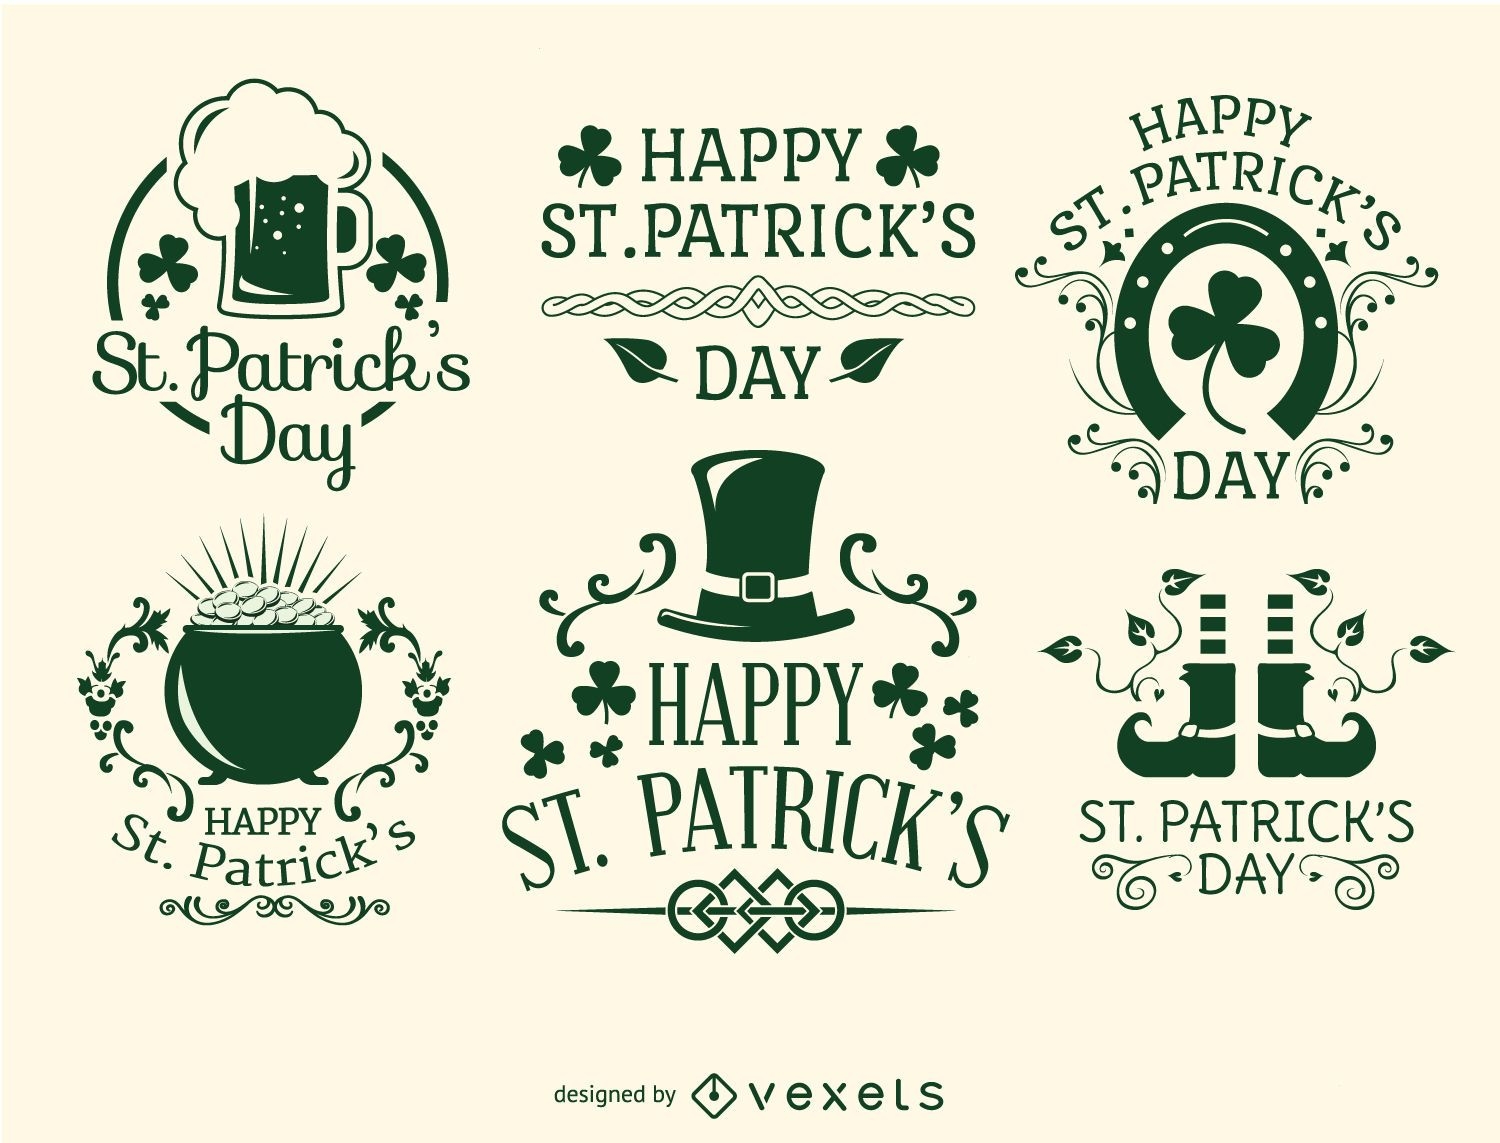 Happy St. Patrick's Day emblems